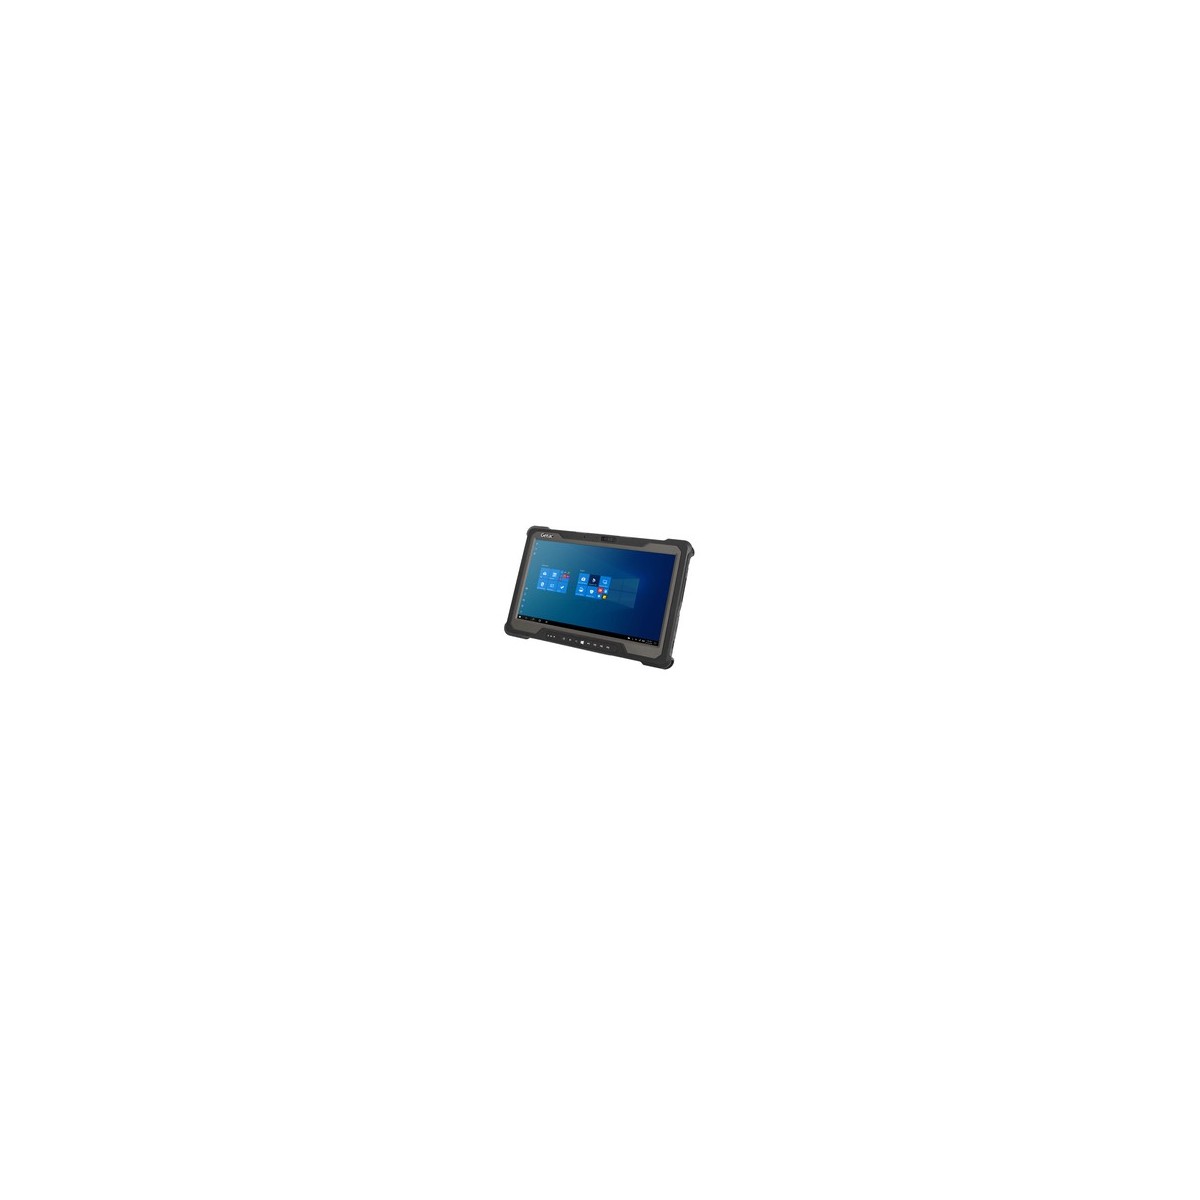 GETAC A140 G2 - 35.6 cm (14) - 1920 x 1200 pixels - 256 GB - 8 GB - Windows 10 Pro - Black